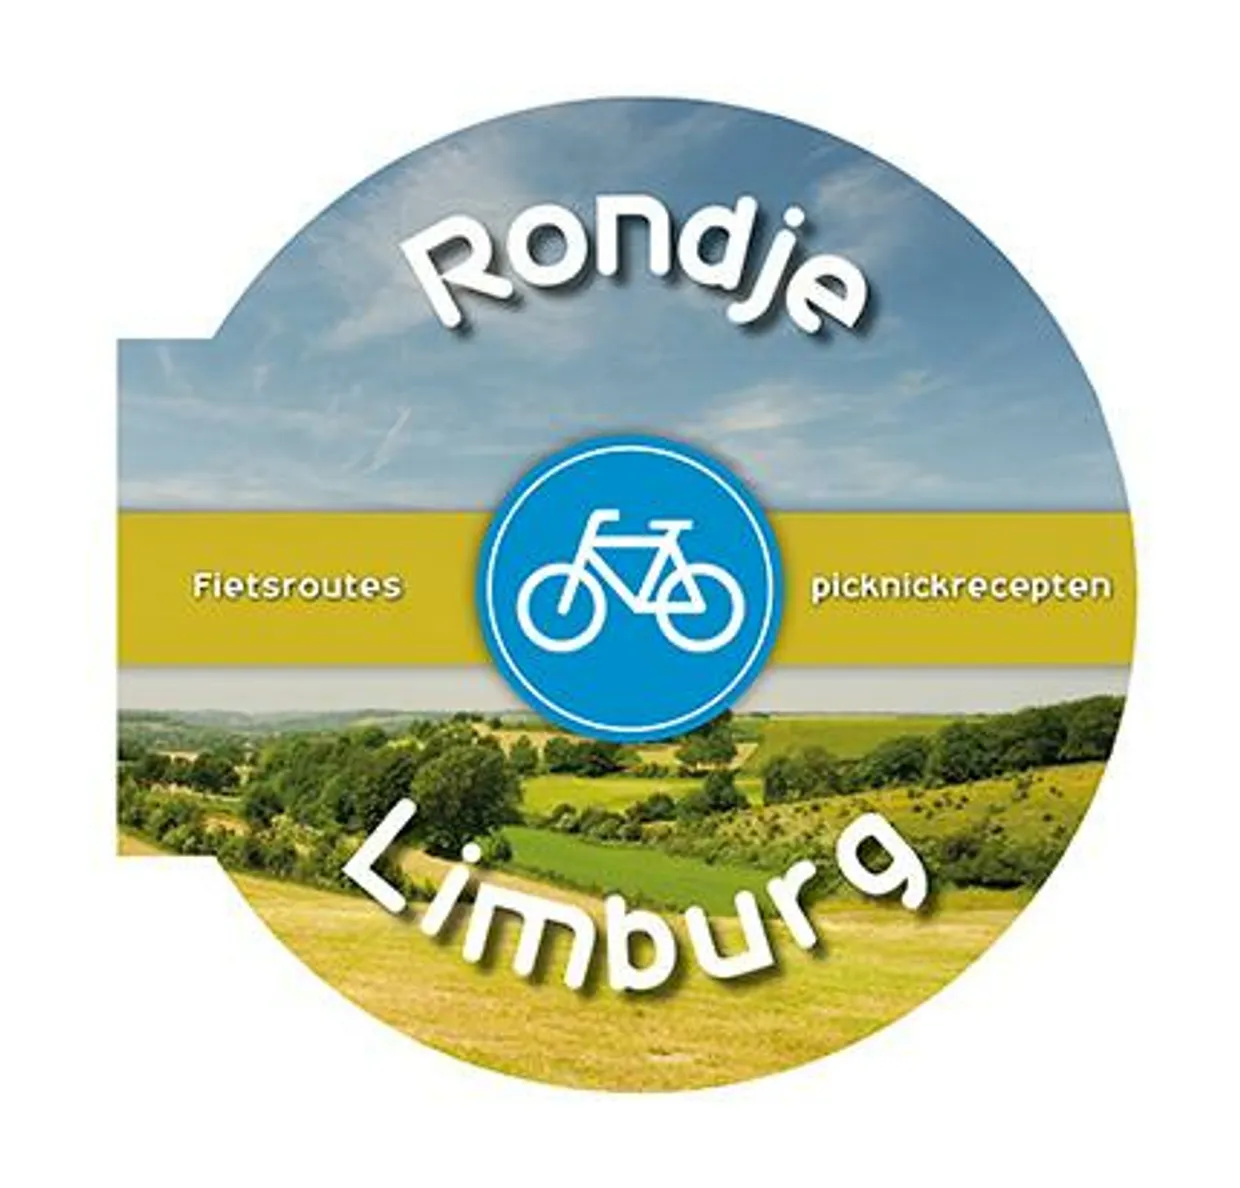 Rondje Limburg